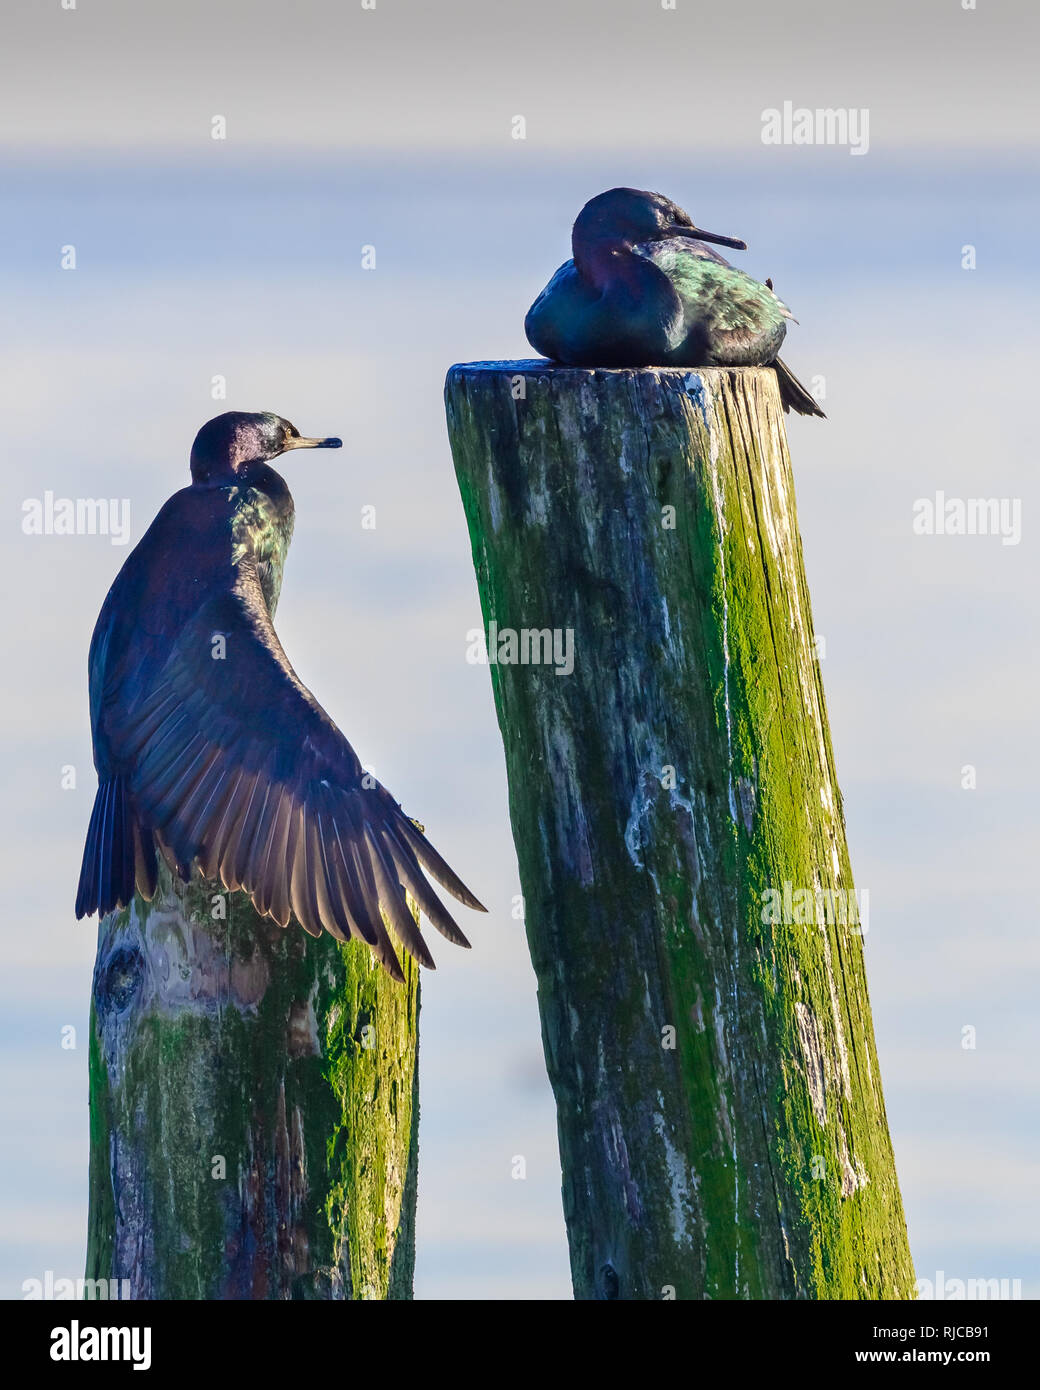 Zwei Kormoran Vögel auf hölzernen Pfosten, British Columbia, Kanada Stockfoto